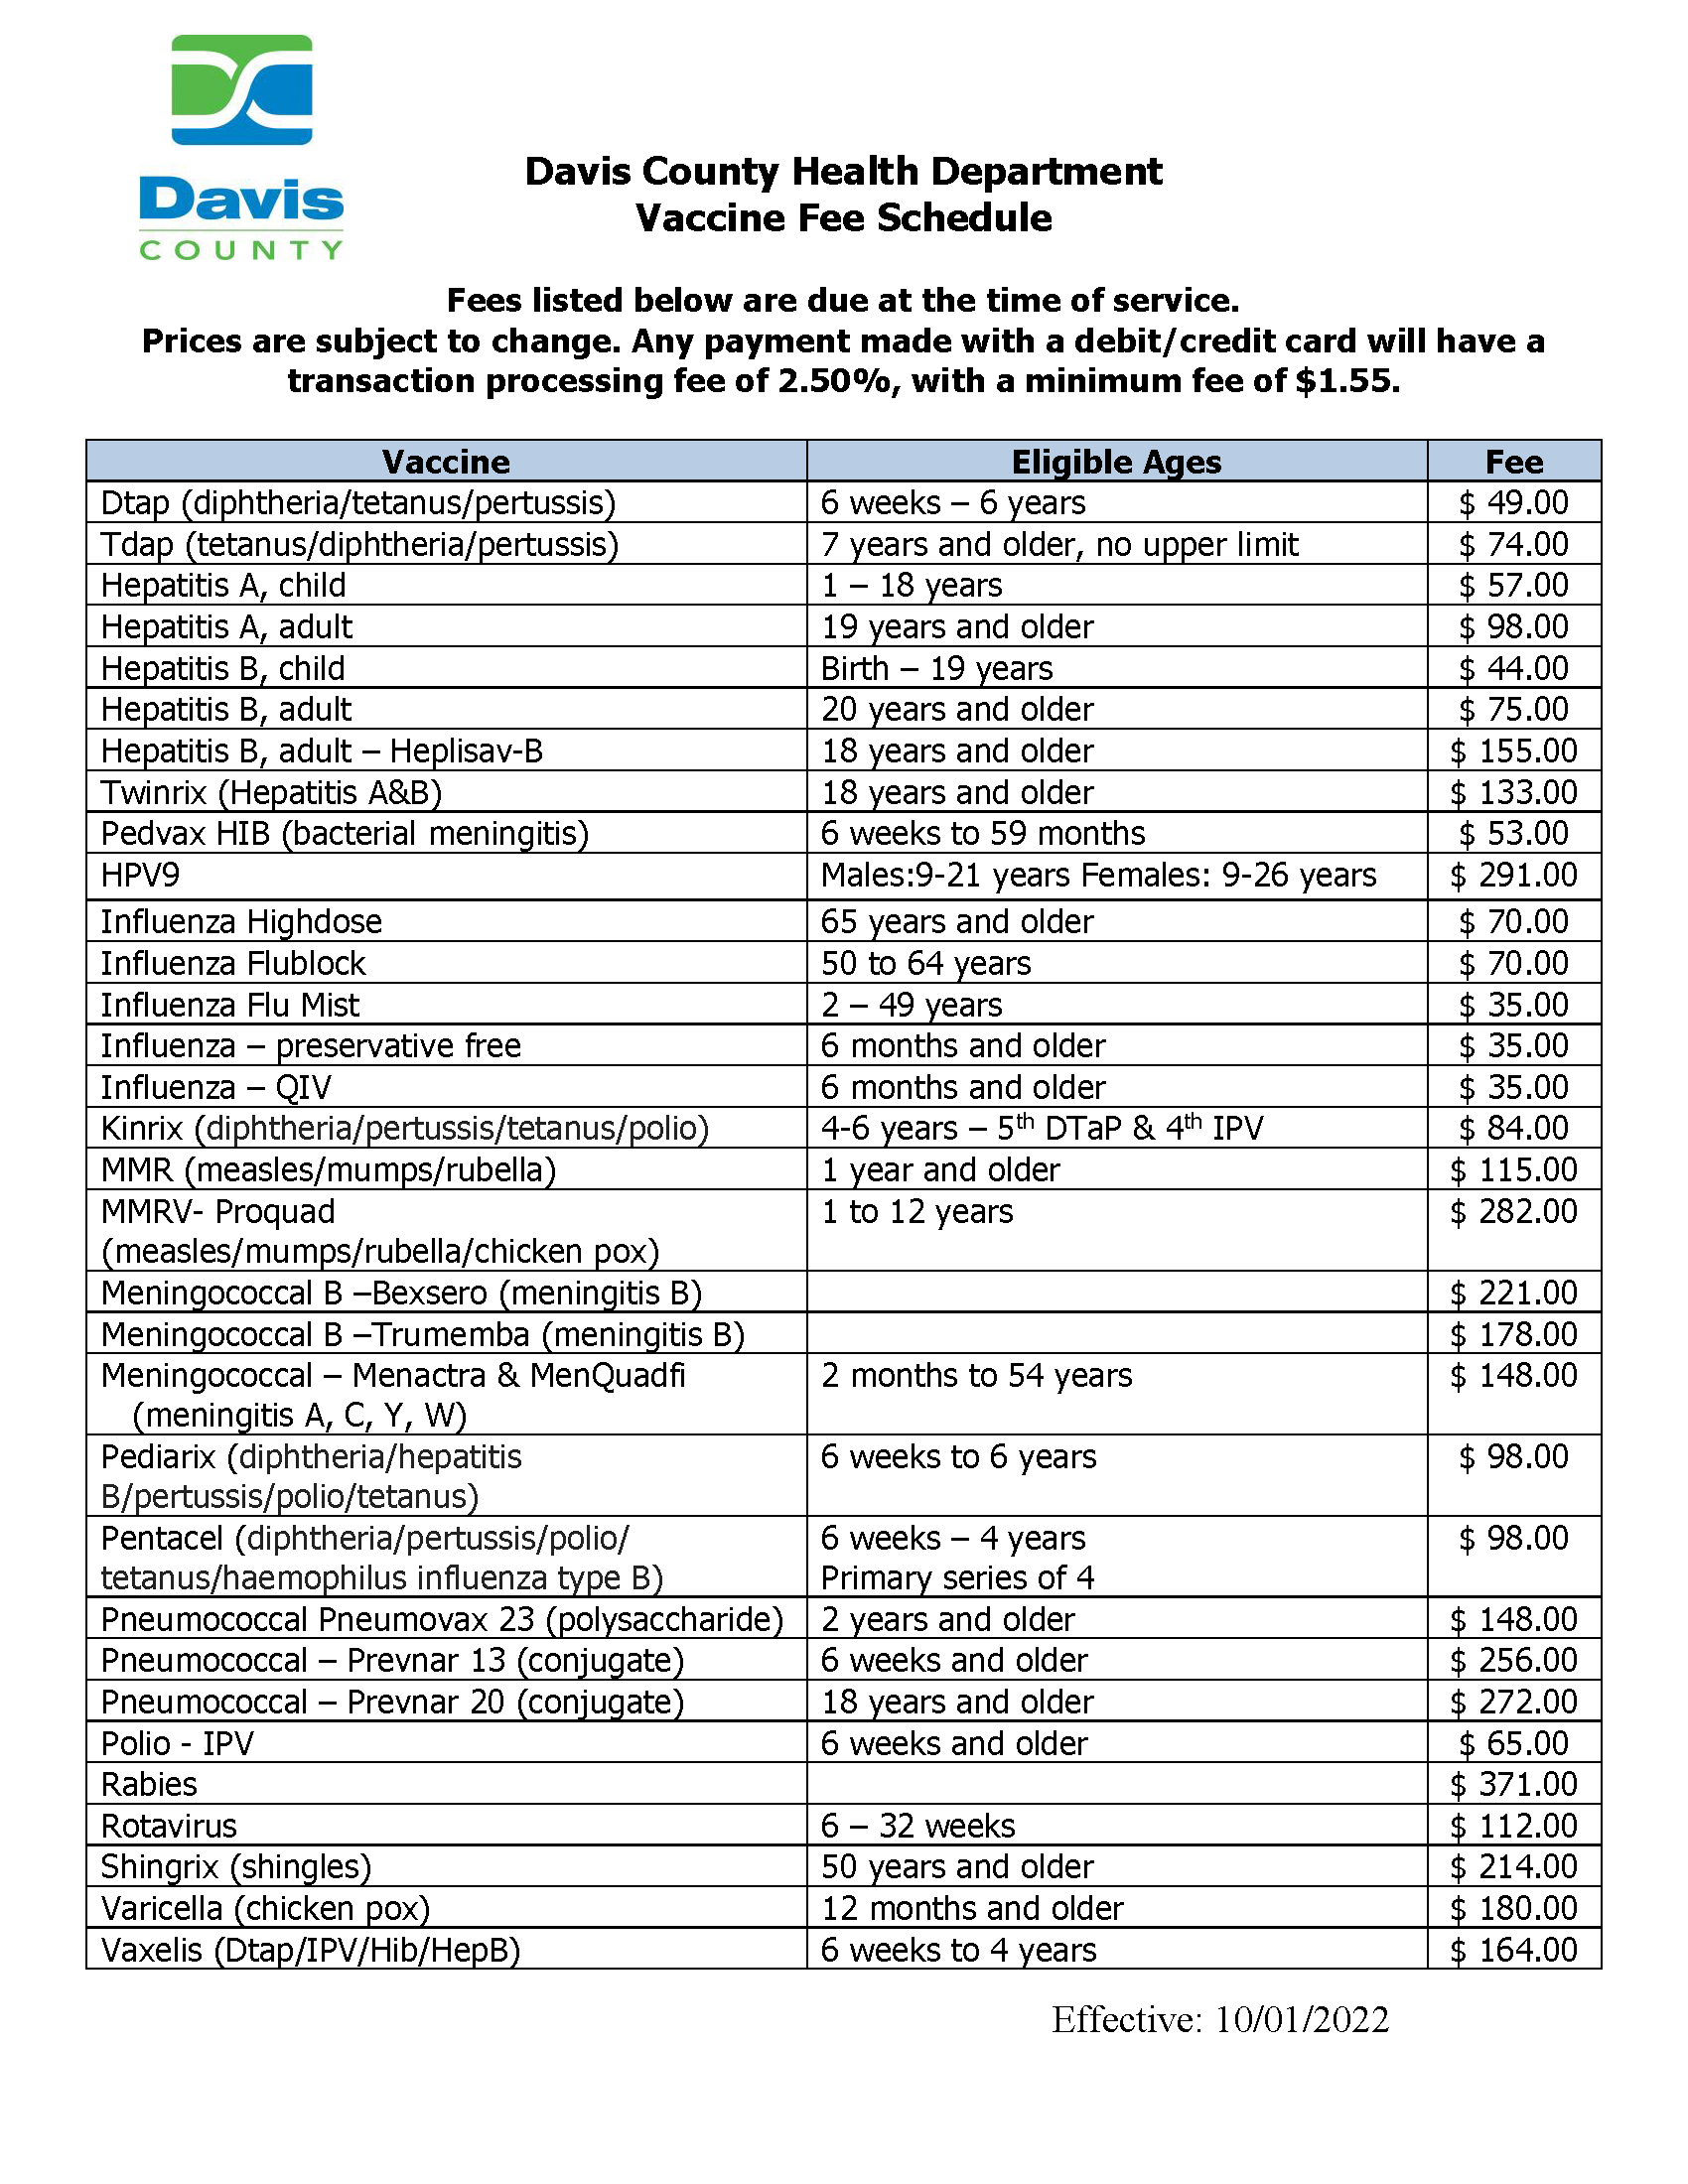 2018 Dec vaccine fee schedule_Page_1